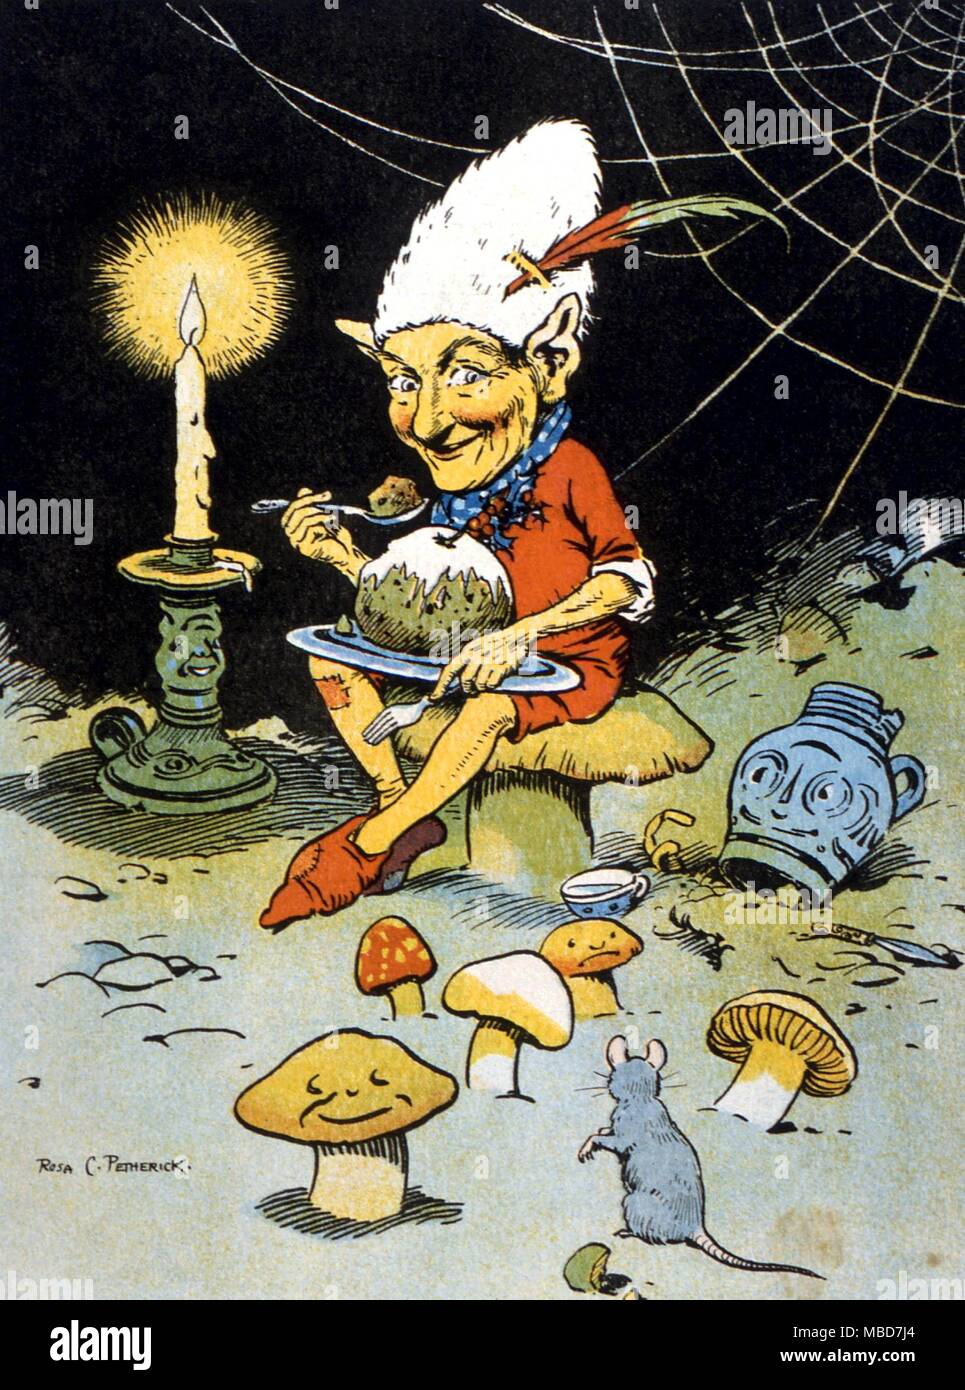 ELEMENTALS Gnome, el Elemental de tierra. Imagen por Rosa Petherick, circa 1920 Foto de stock